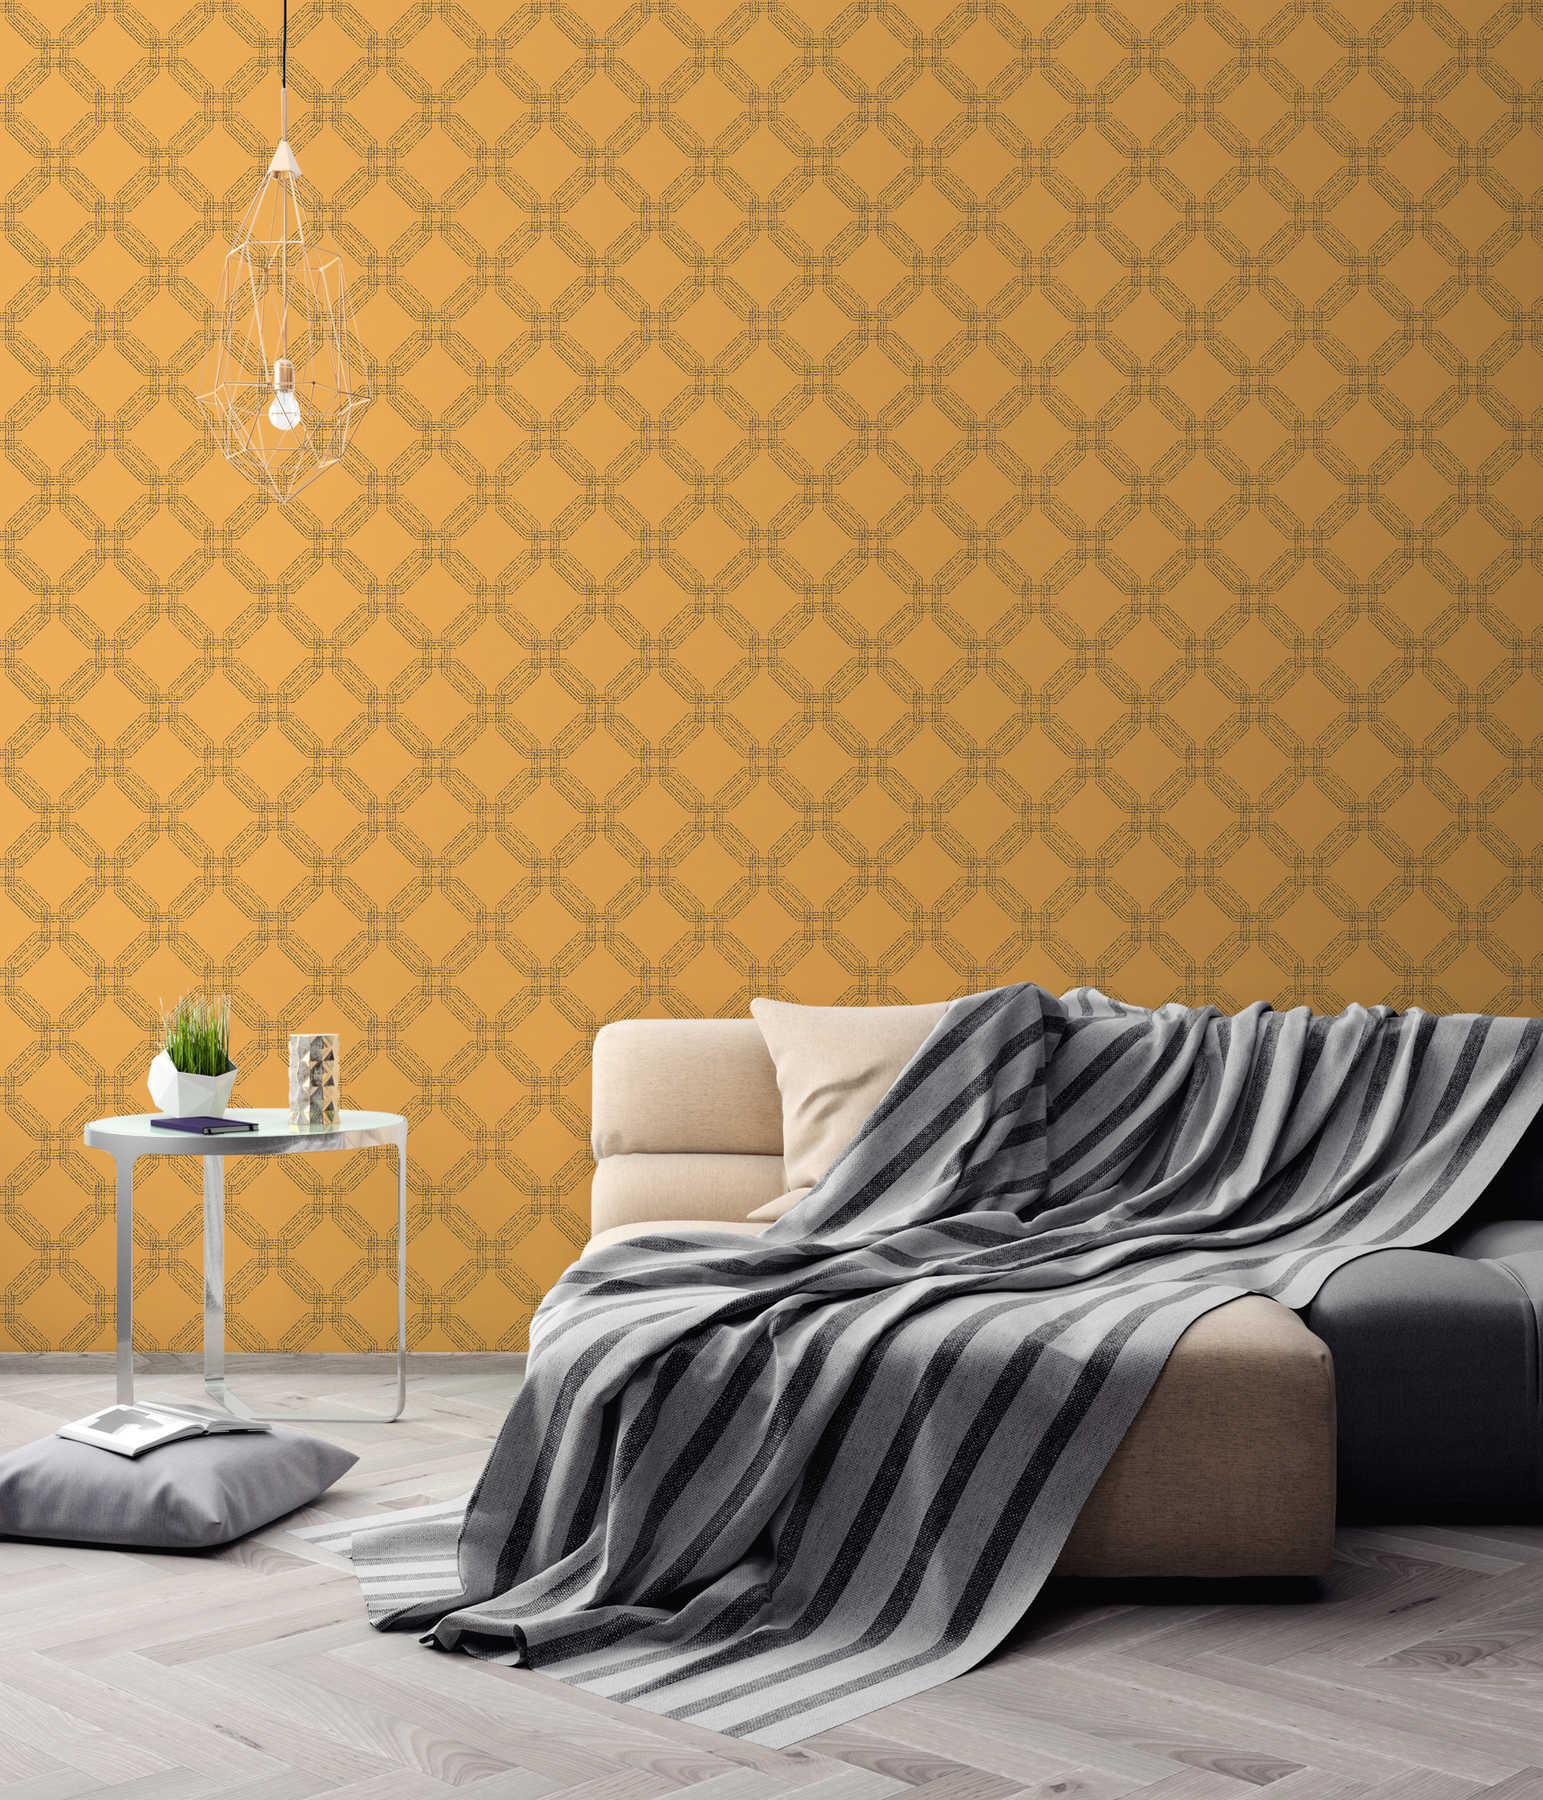             Wallpaper with diamond optics, textured - yellow, silver
        